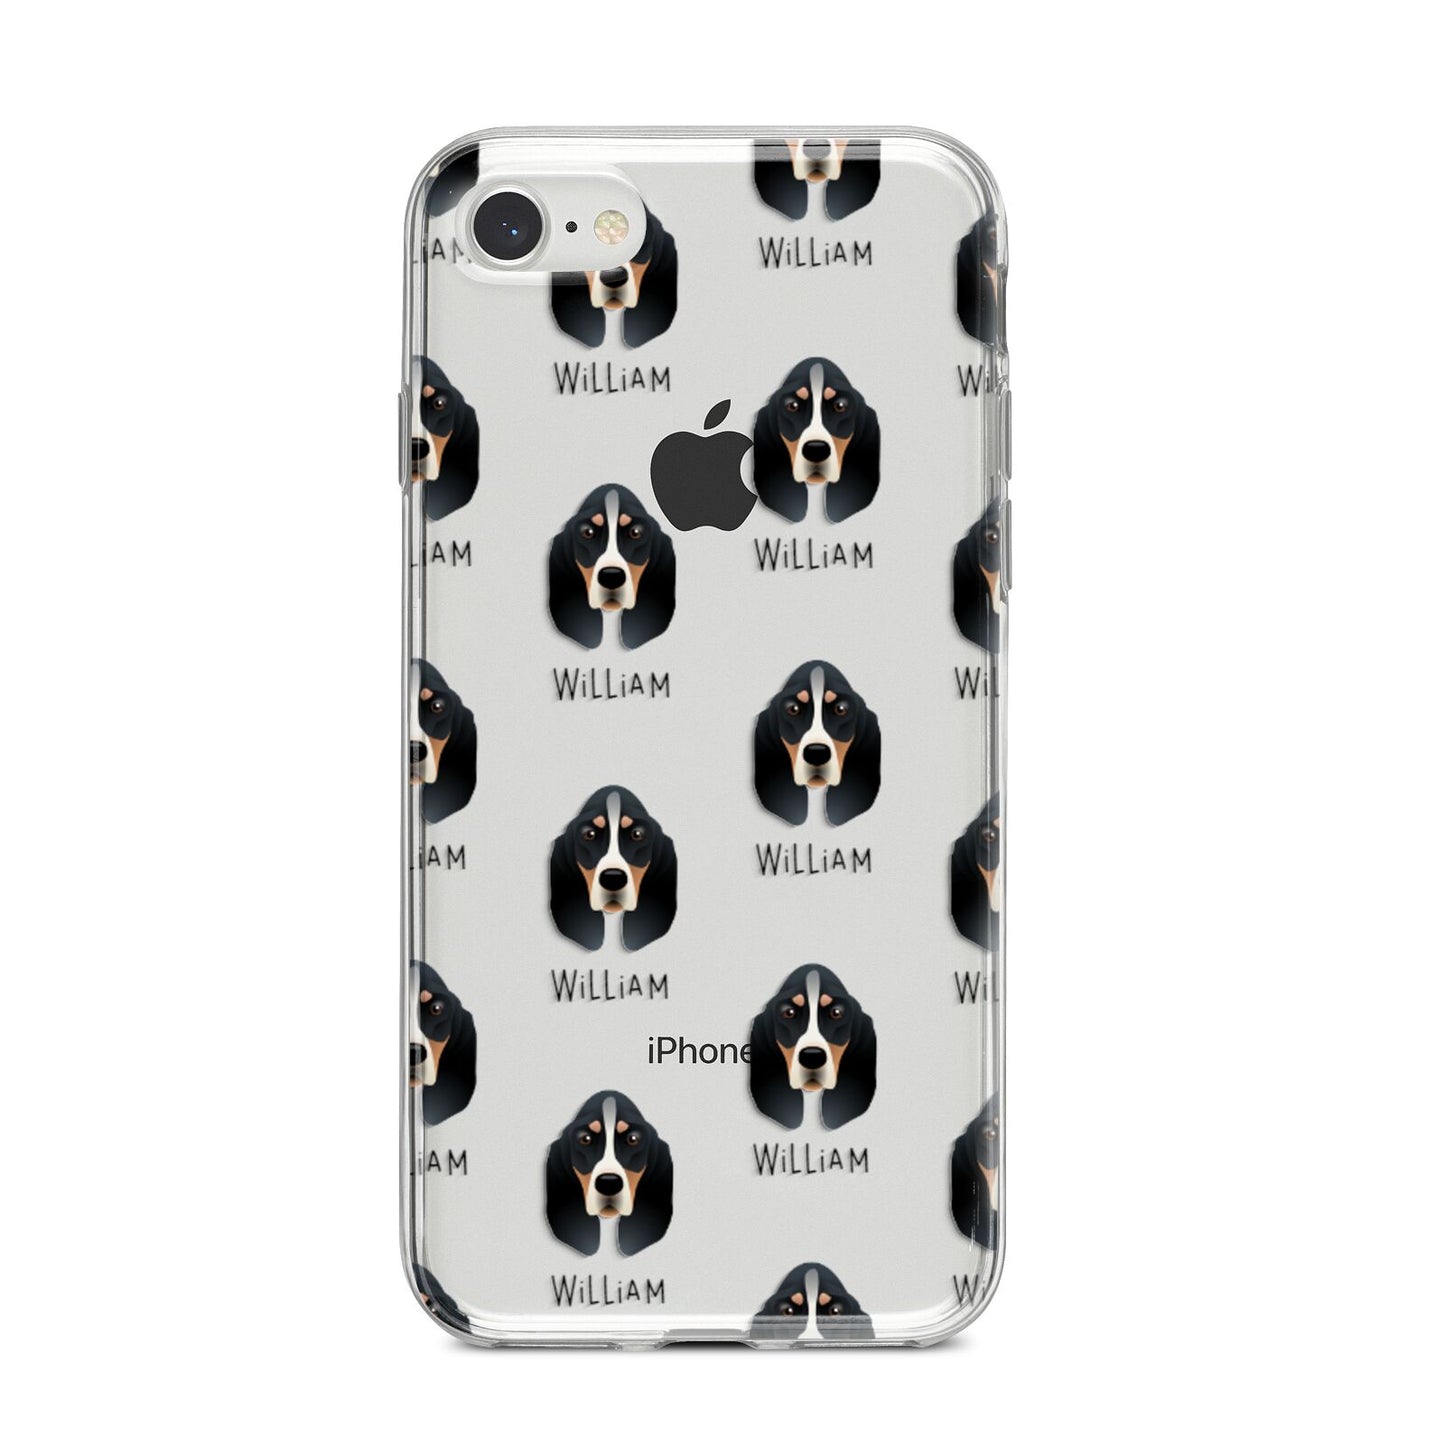 Basset Bleu De Gascogne Icon with Name iPhone 8 Bumper Case on Silver iPhone